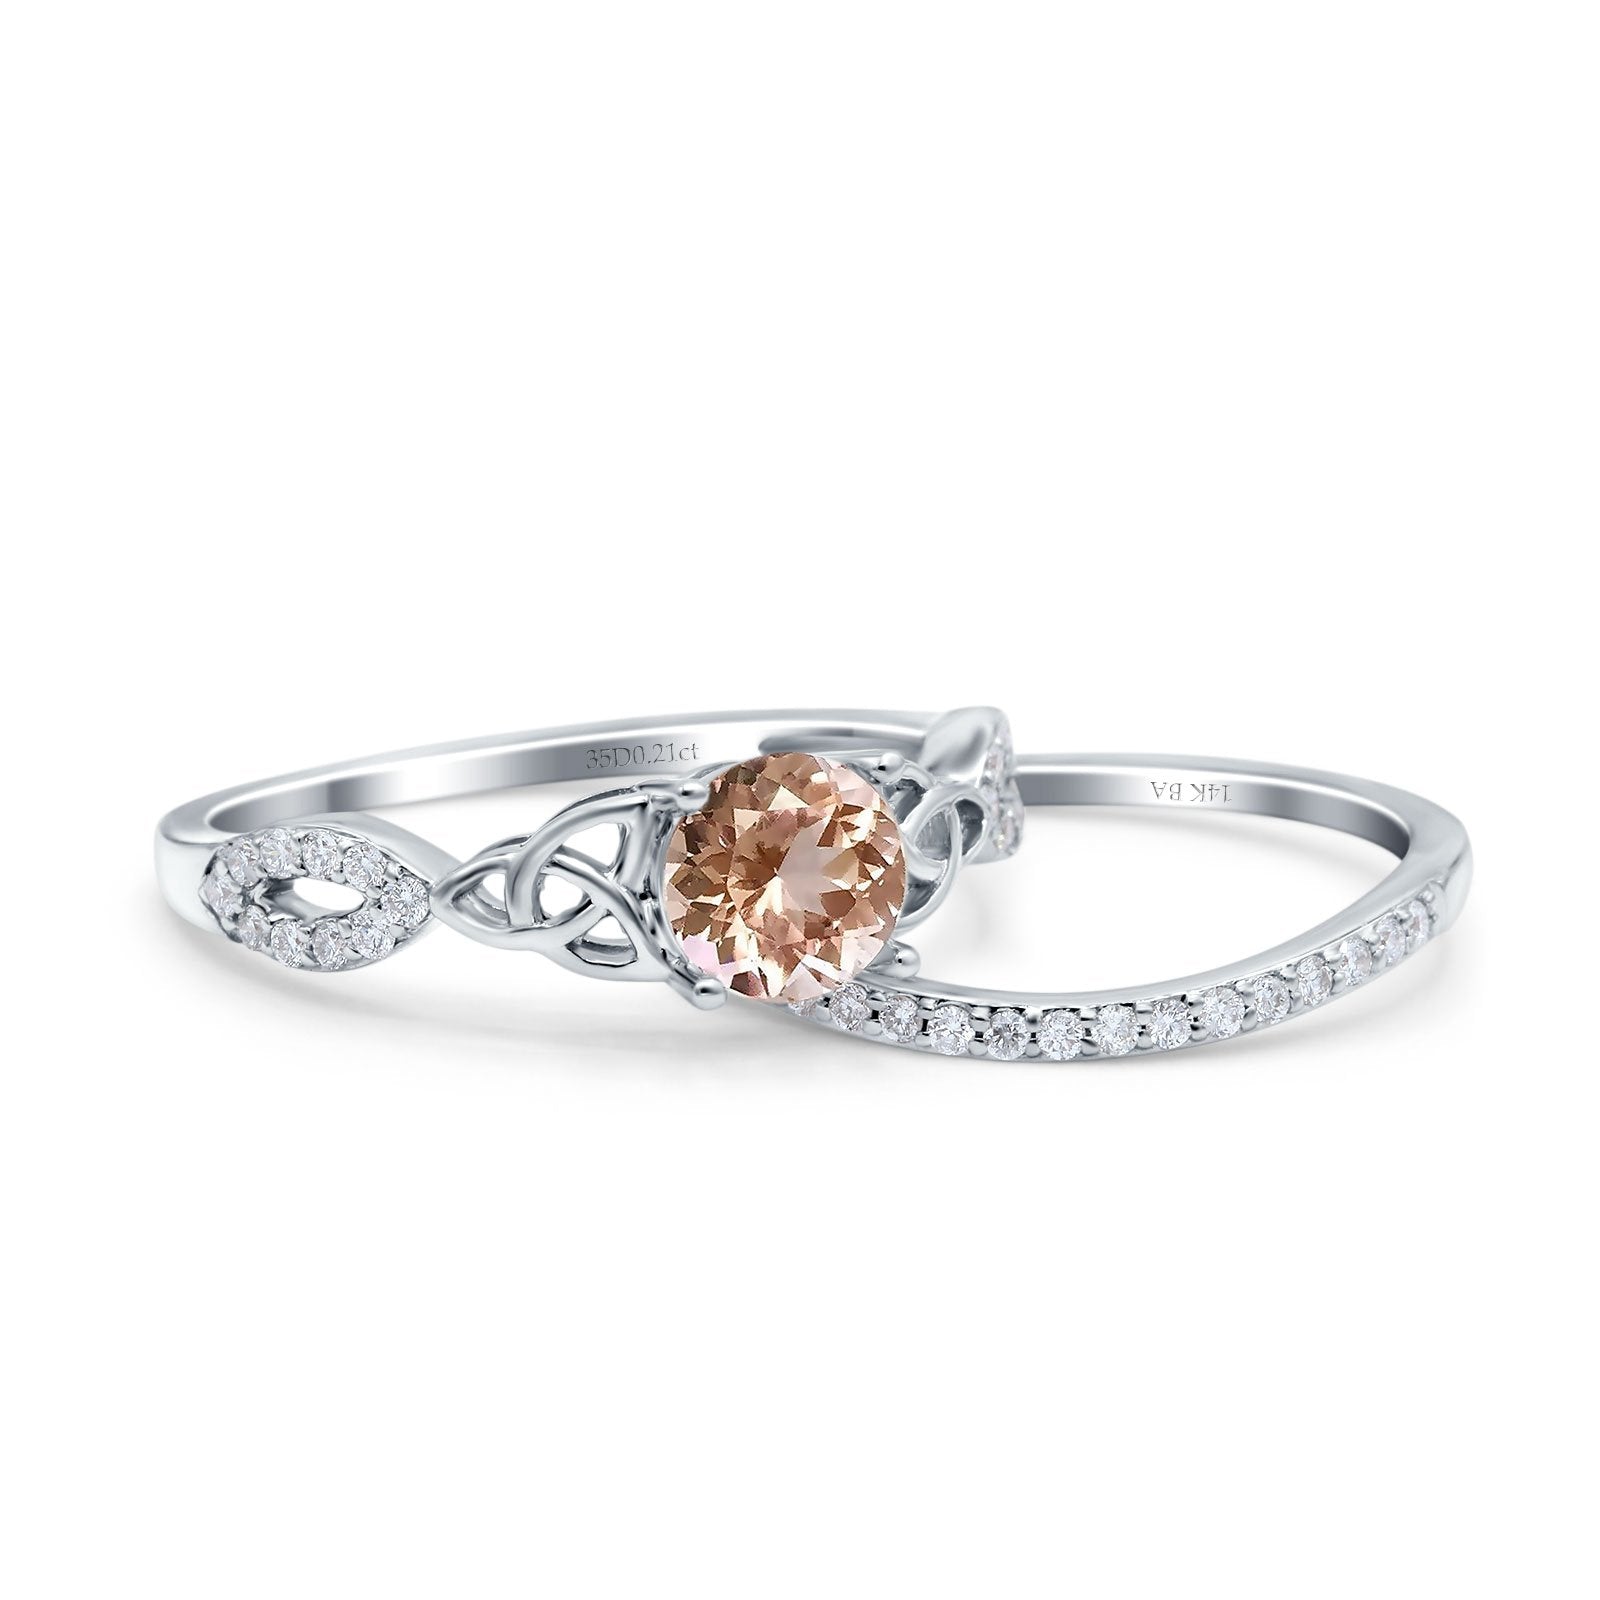 14K White Gold 1.05ct Round 6mm G SI Natural Morganite Diamond Engagement Bridal Wedding Ring Size 6.5